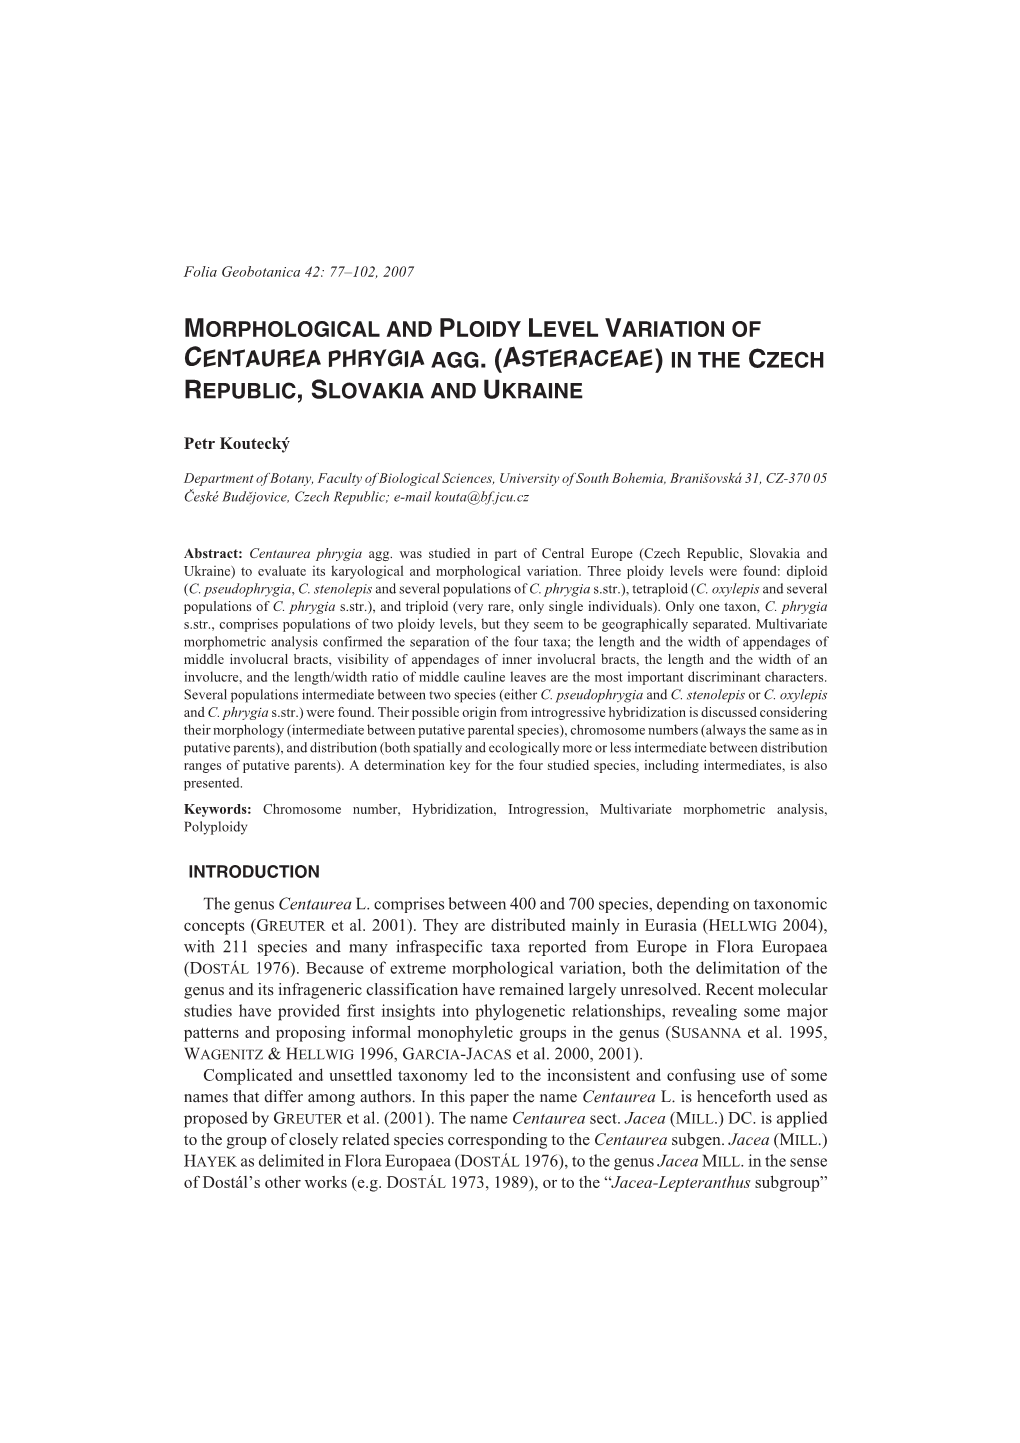 Morphological and Ploidy Level Variation of Centaurea Phrygia Agg